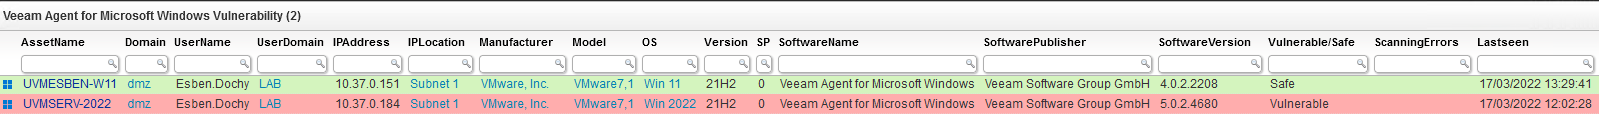 Veeam agent vulnerability report